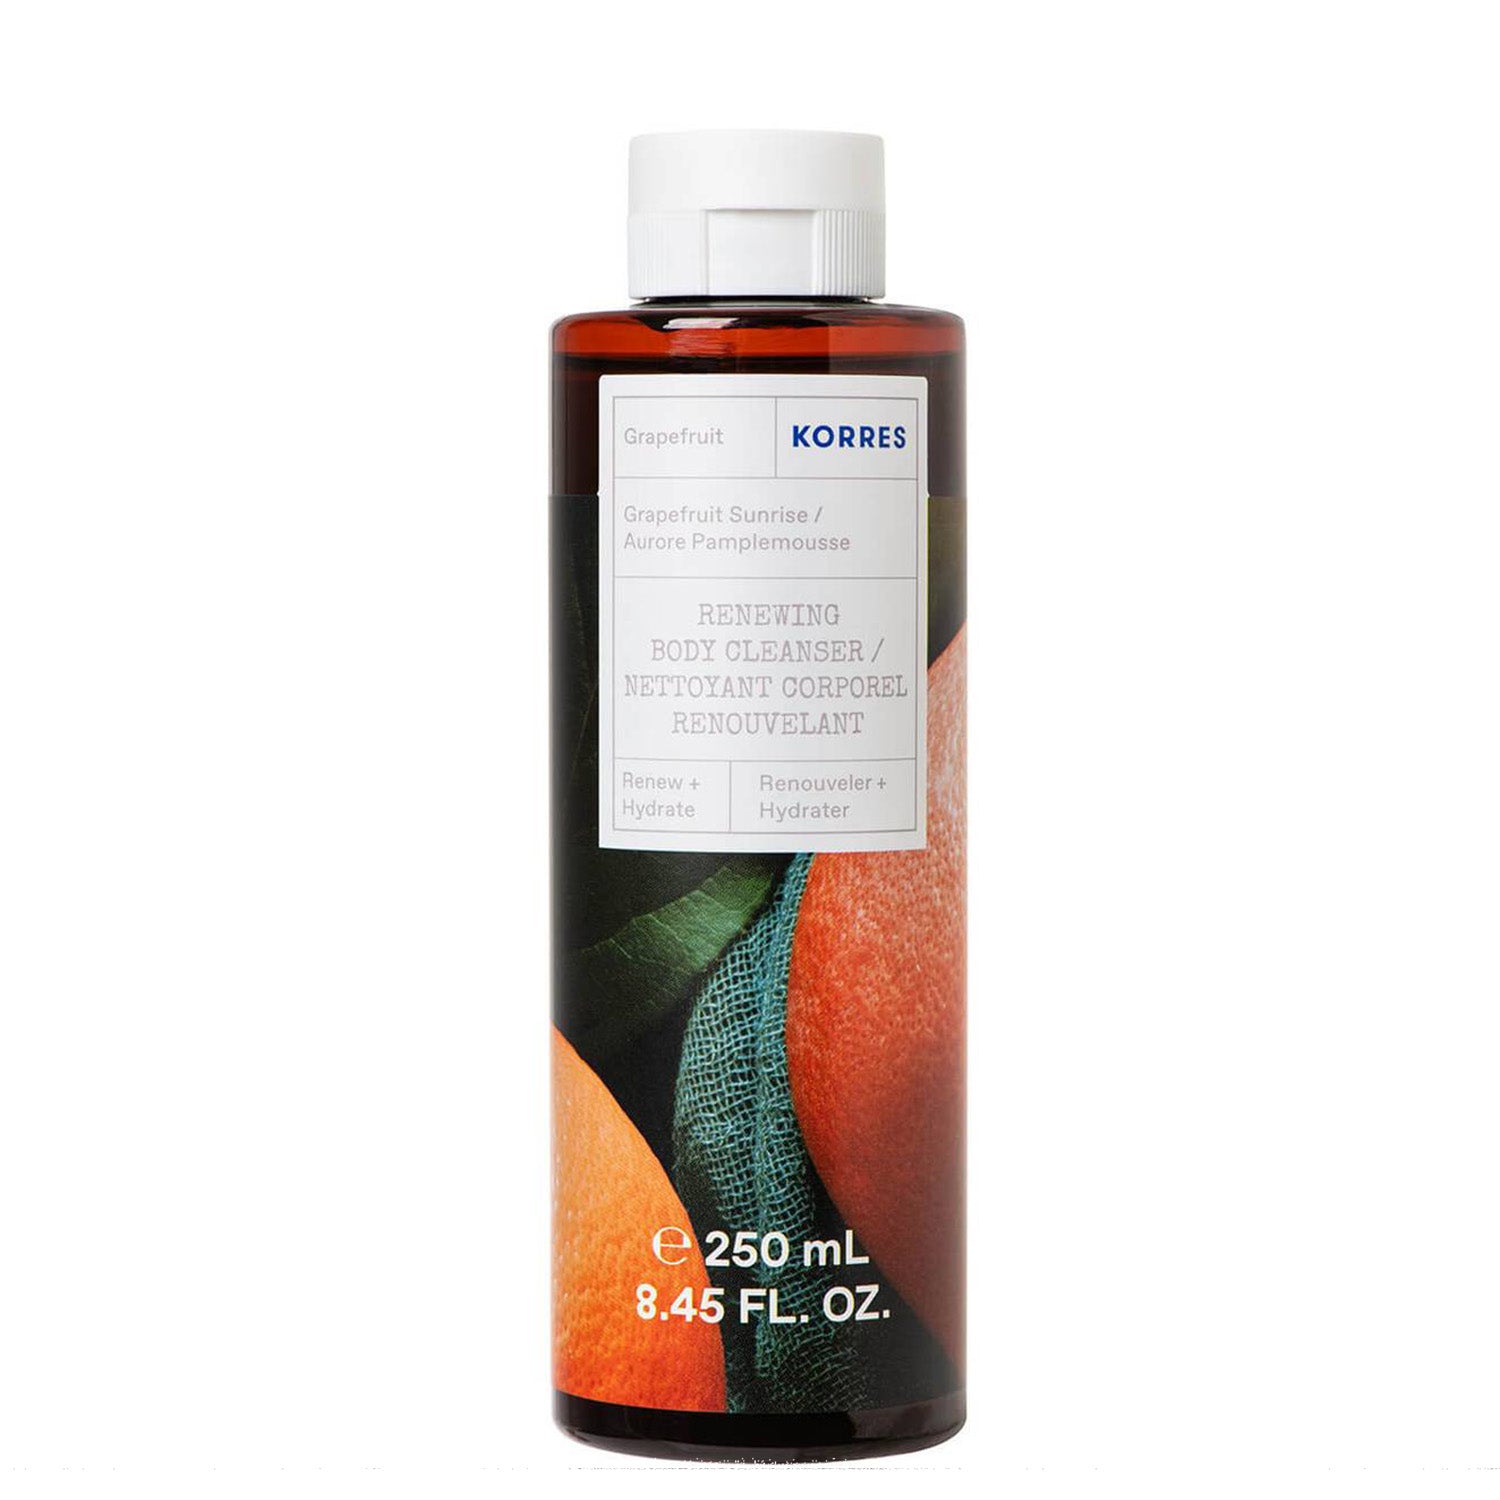 Korres Grapefruit Sunrise Shower Gel refreshing aroma is a blend of freshly cut grapefruit, coupled with sweet neroli and bergamot scents.